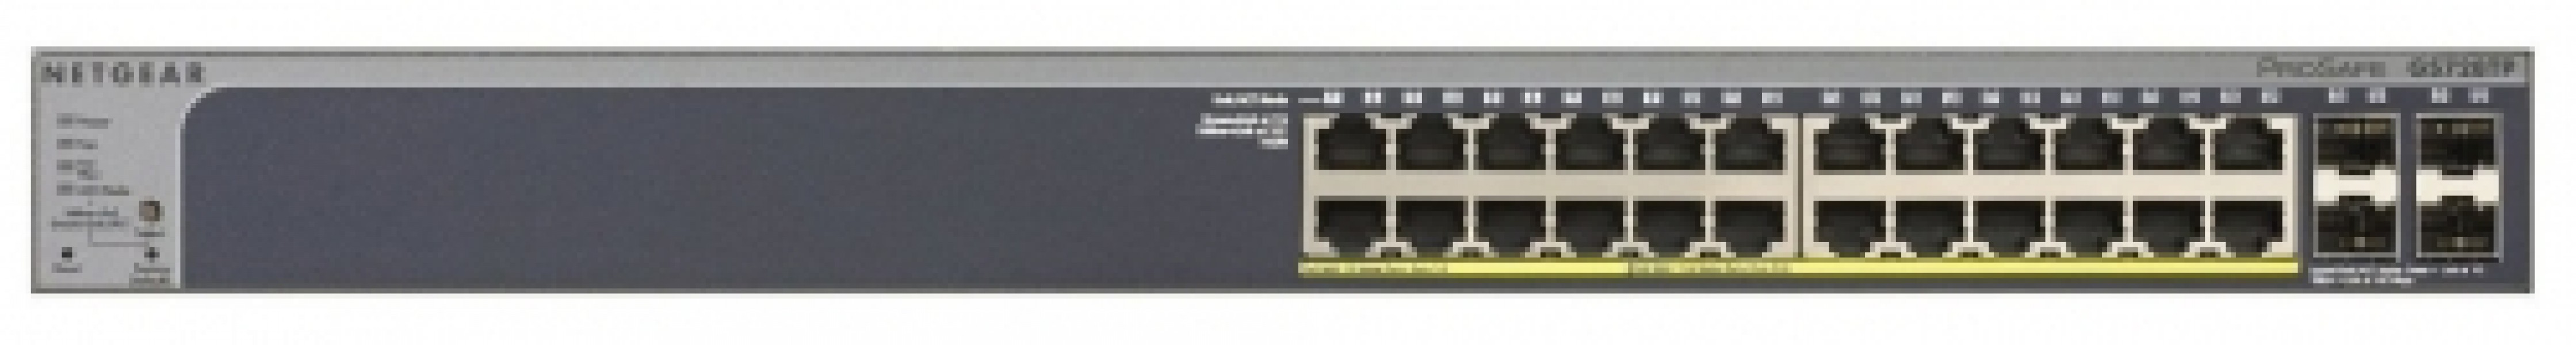 Netgear ProSafe Smart 28-Port PoE Gigabit Switch (GS728TP)